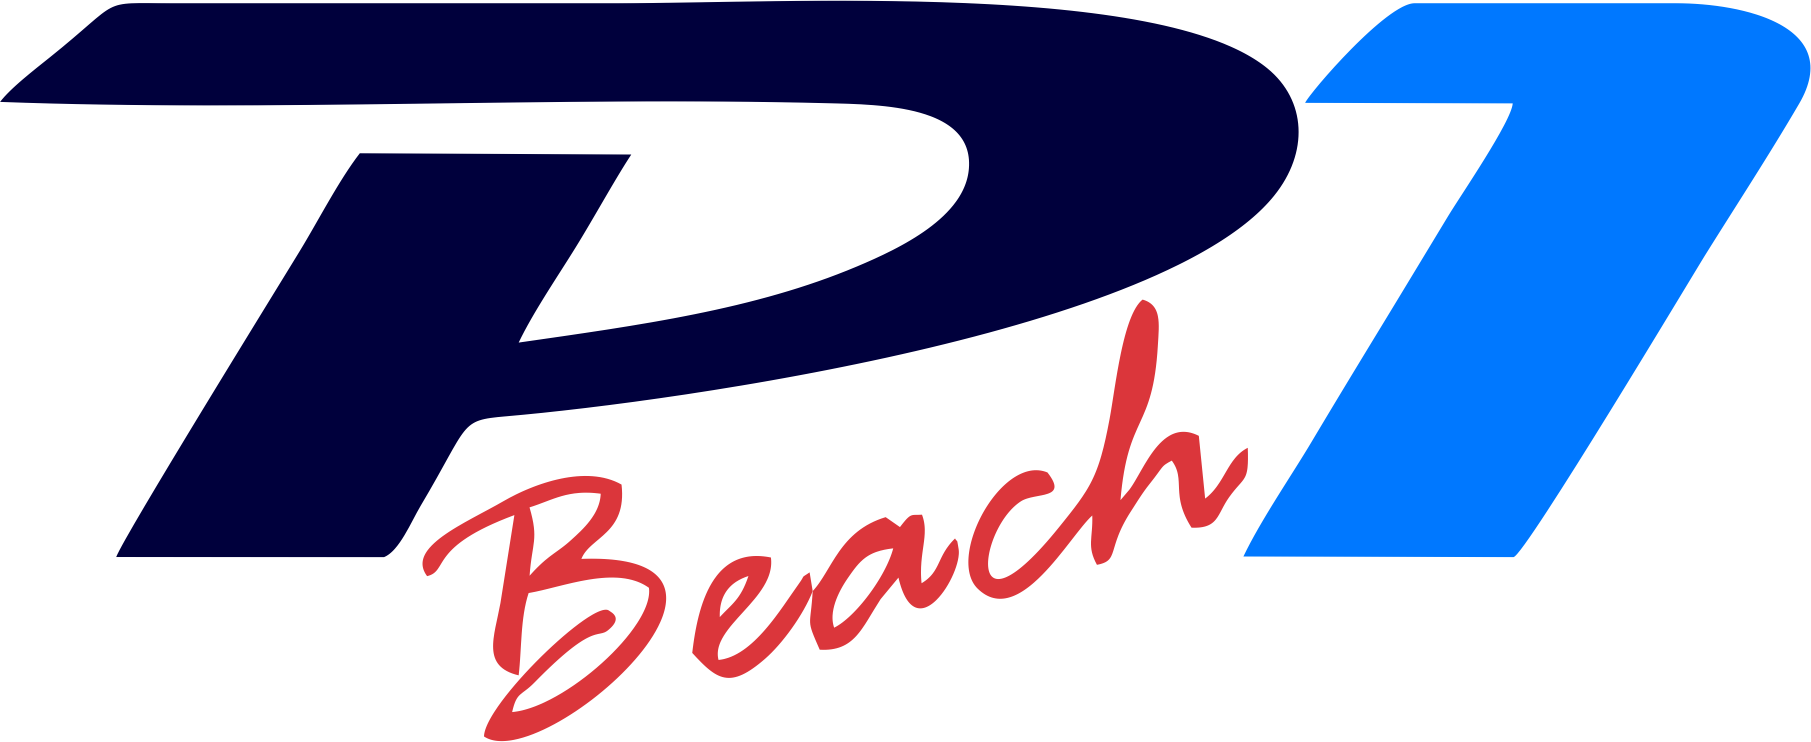 P1 Beach Volleyball